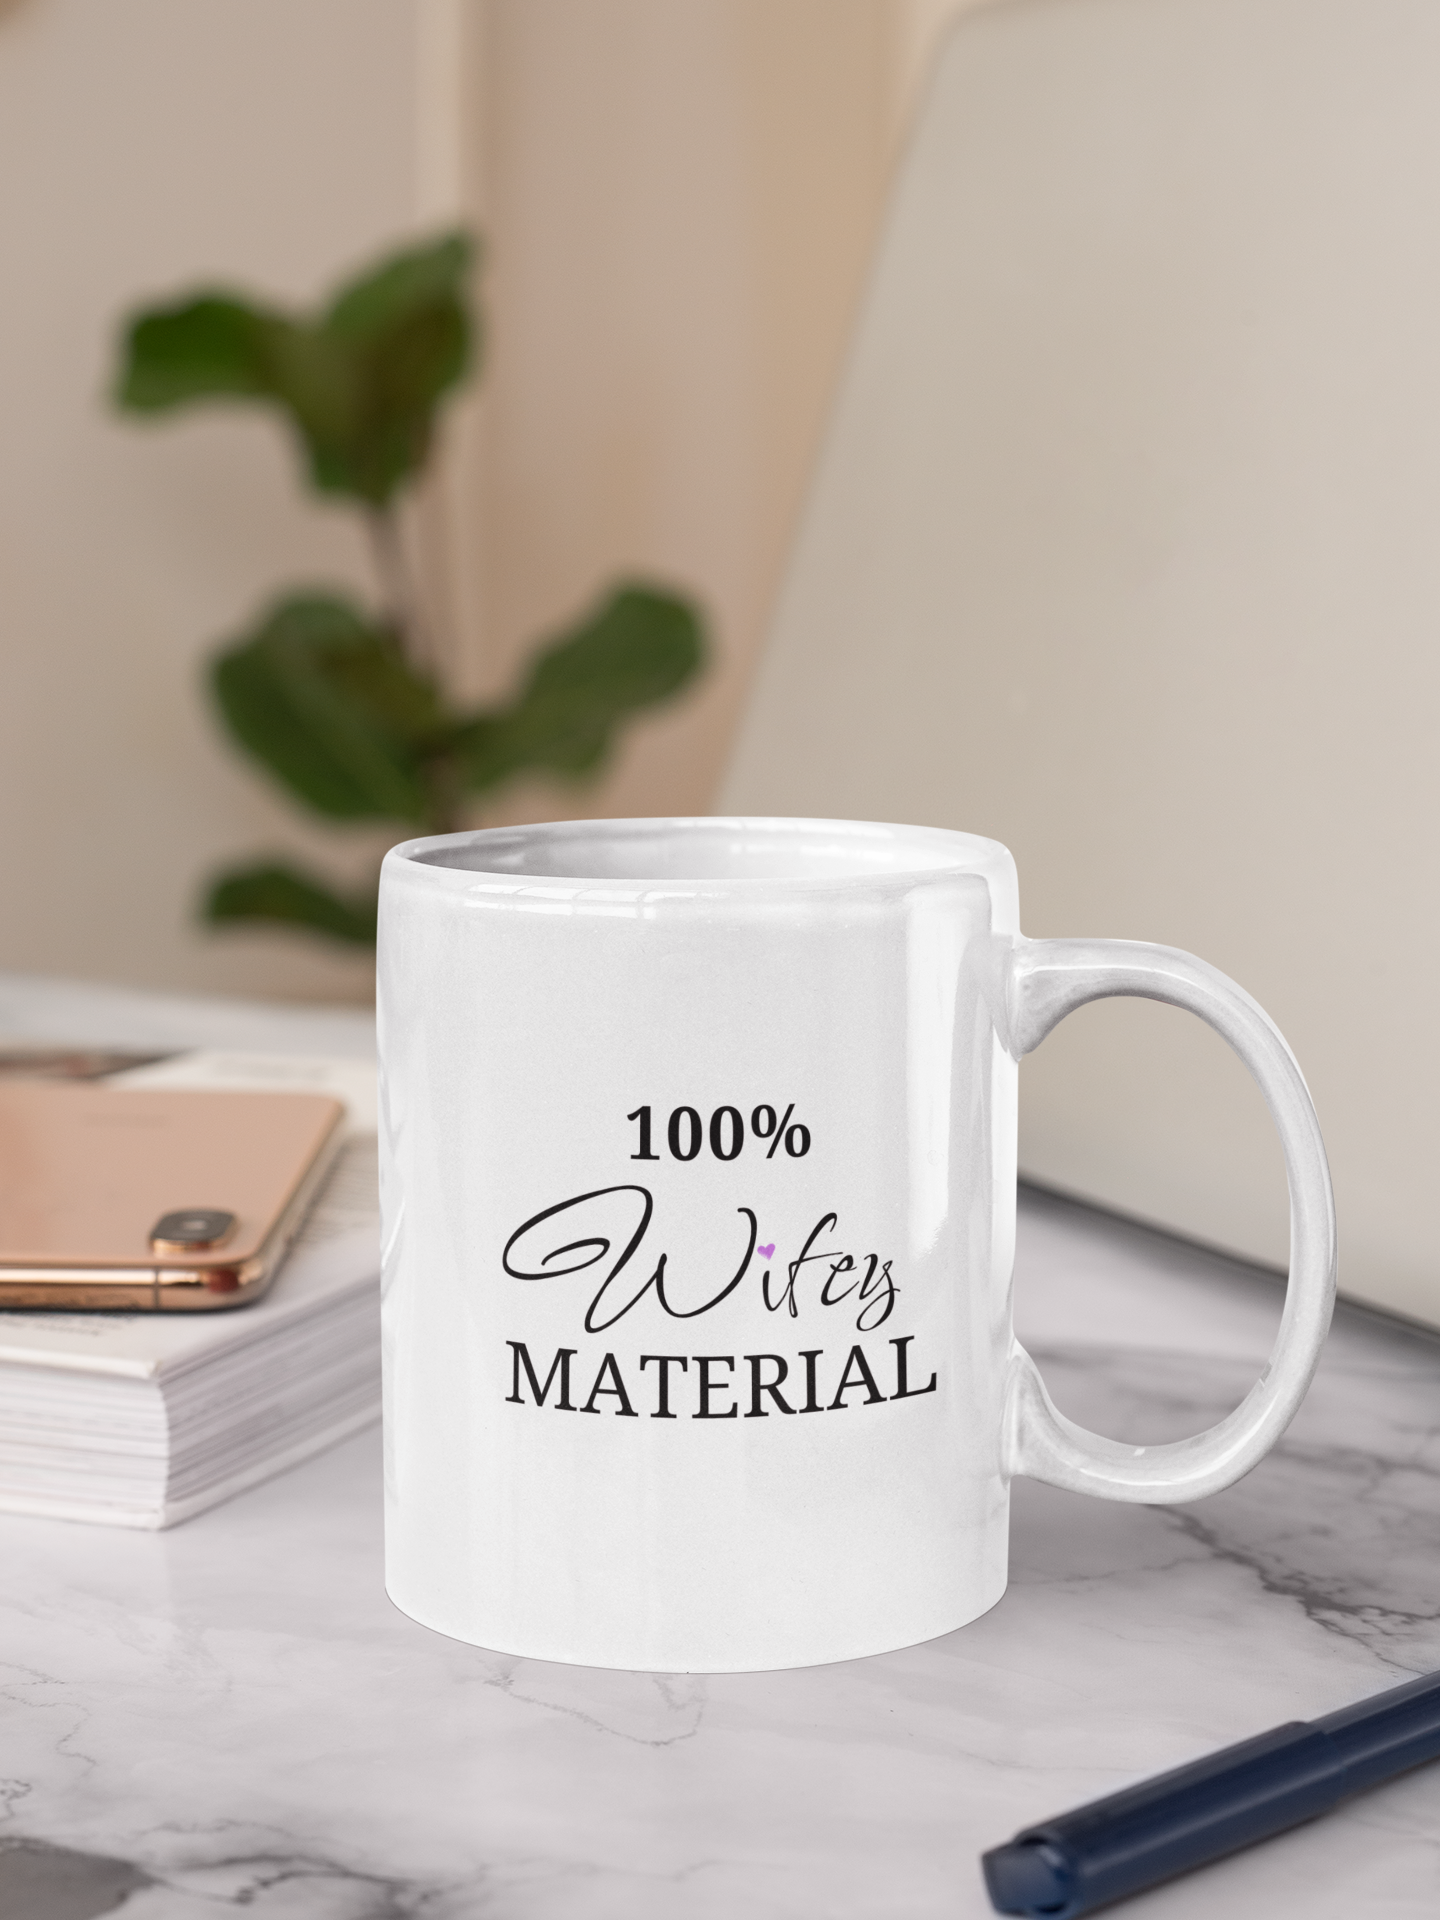 100% Wifey Material!: Trendy 15oz Ceramic Coffee Mug for Blissful Mornings